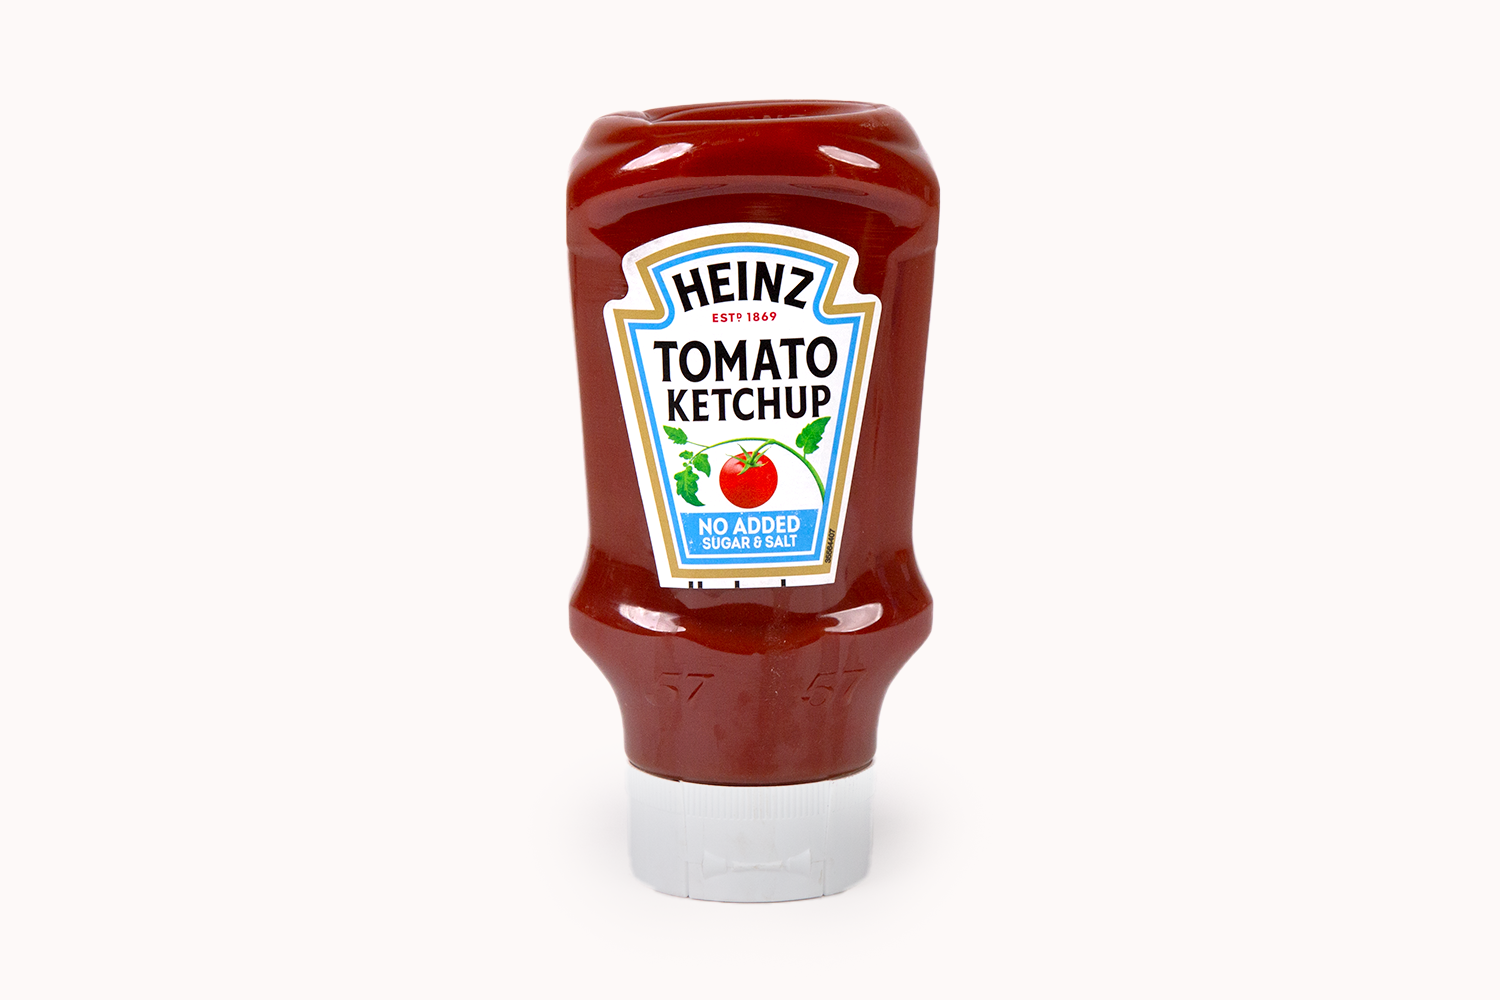 Heinz Tomato Ketchup With No Added Sugar & Salt